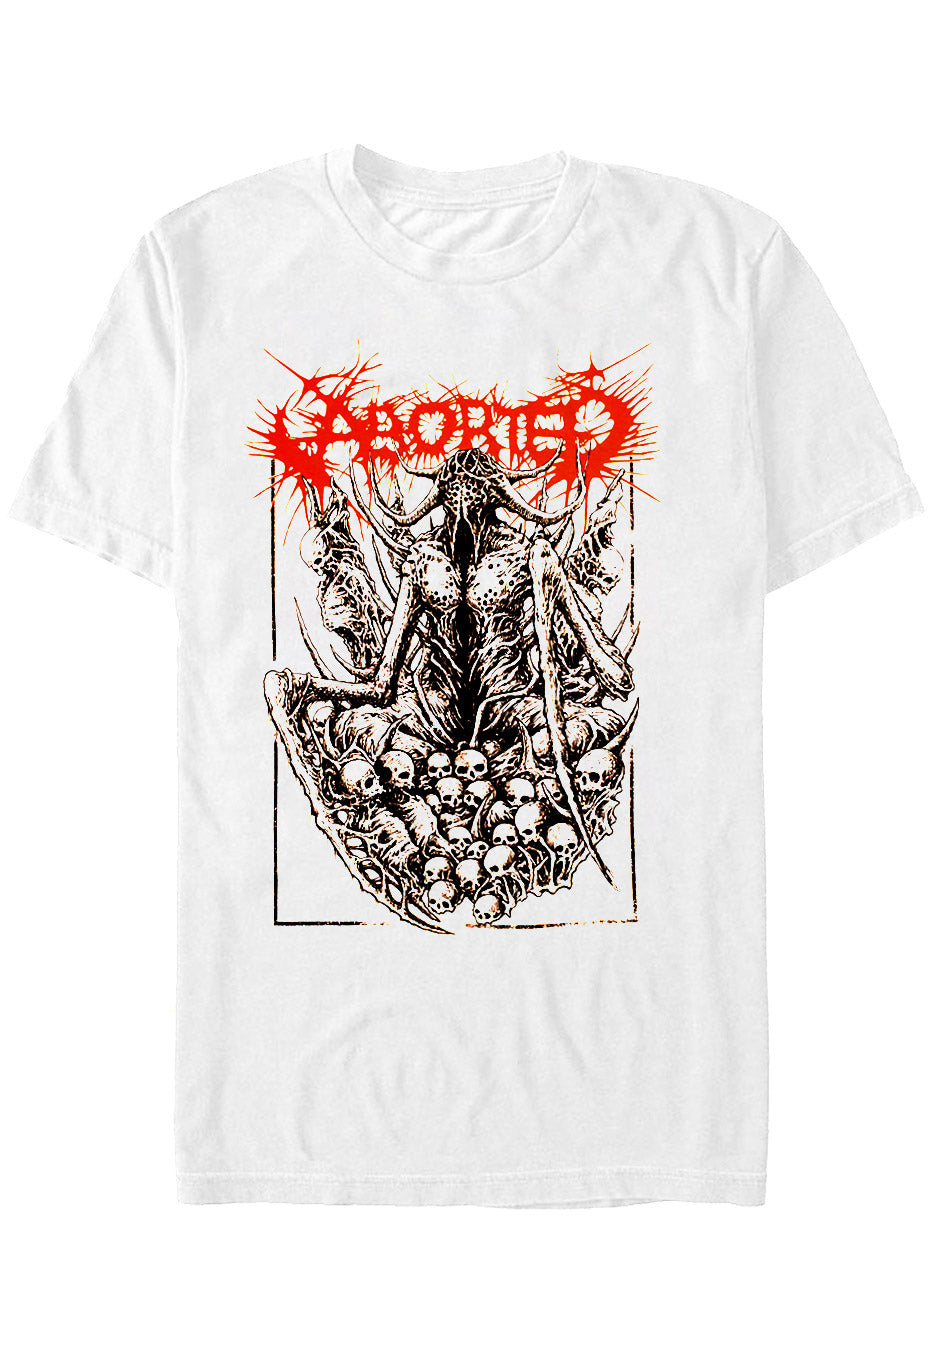 Aborted - Portal White - T-Shirt